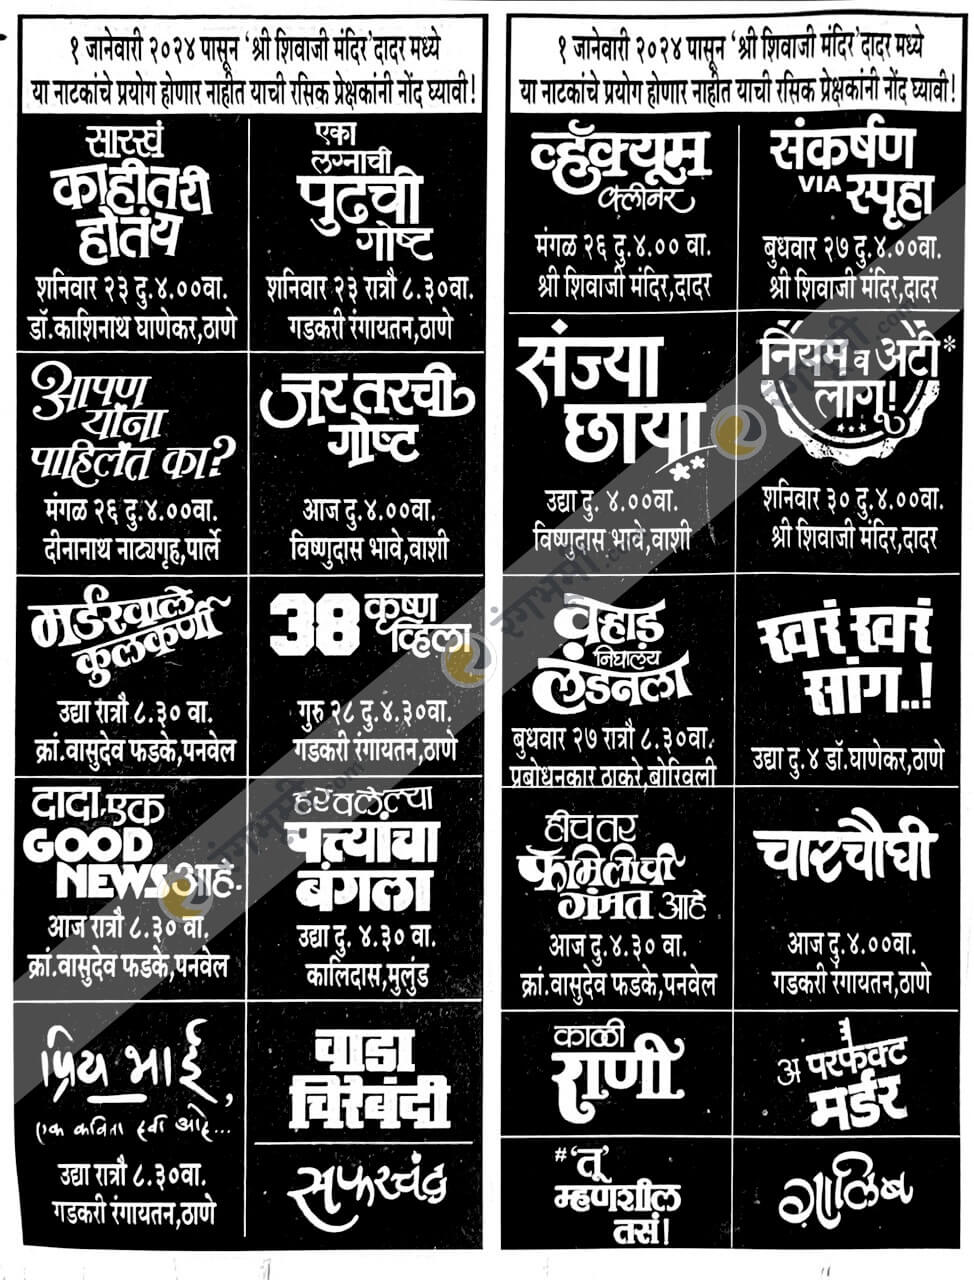 shree shivaji mandir natak boycott list